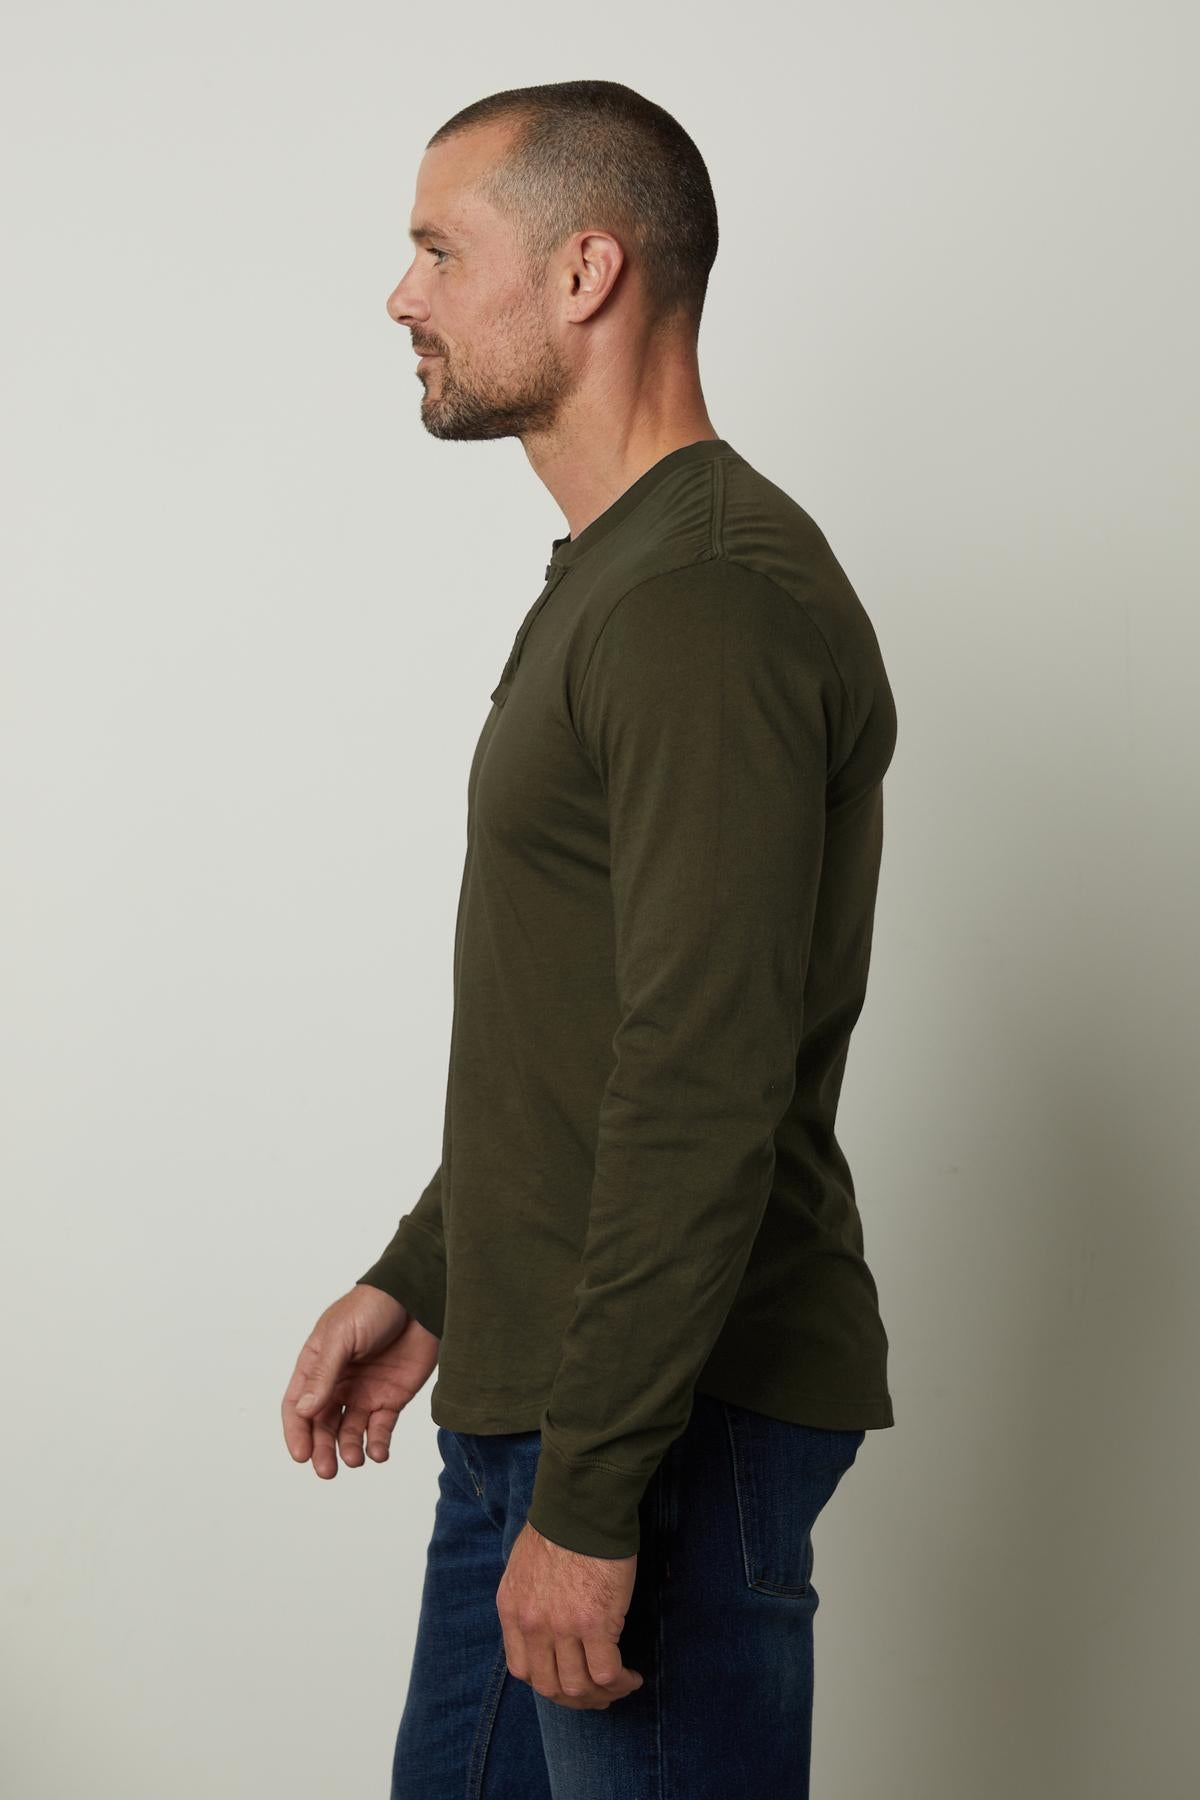 A man wearing a lightweight green Velvet by Graham & Spencer BRADEN HENLEY t-shirt made of cotton fabric and jeans.-35547527086273